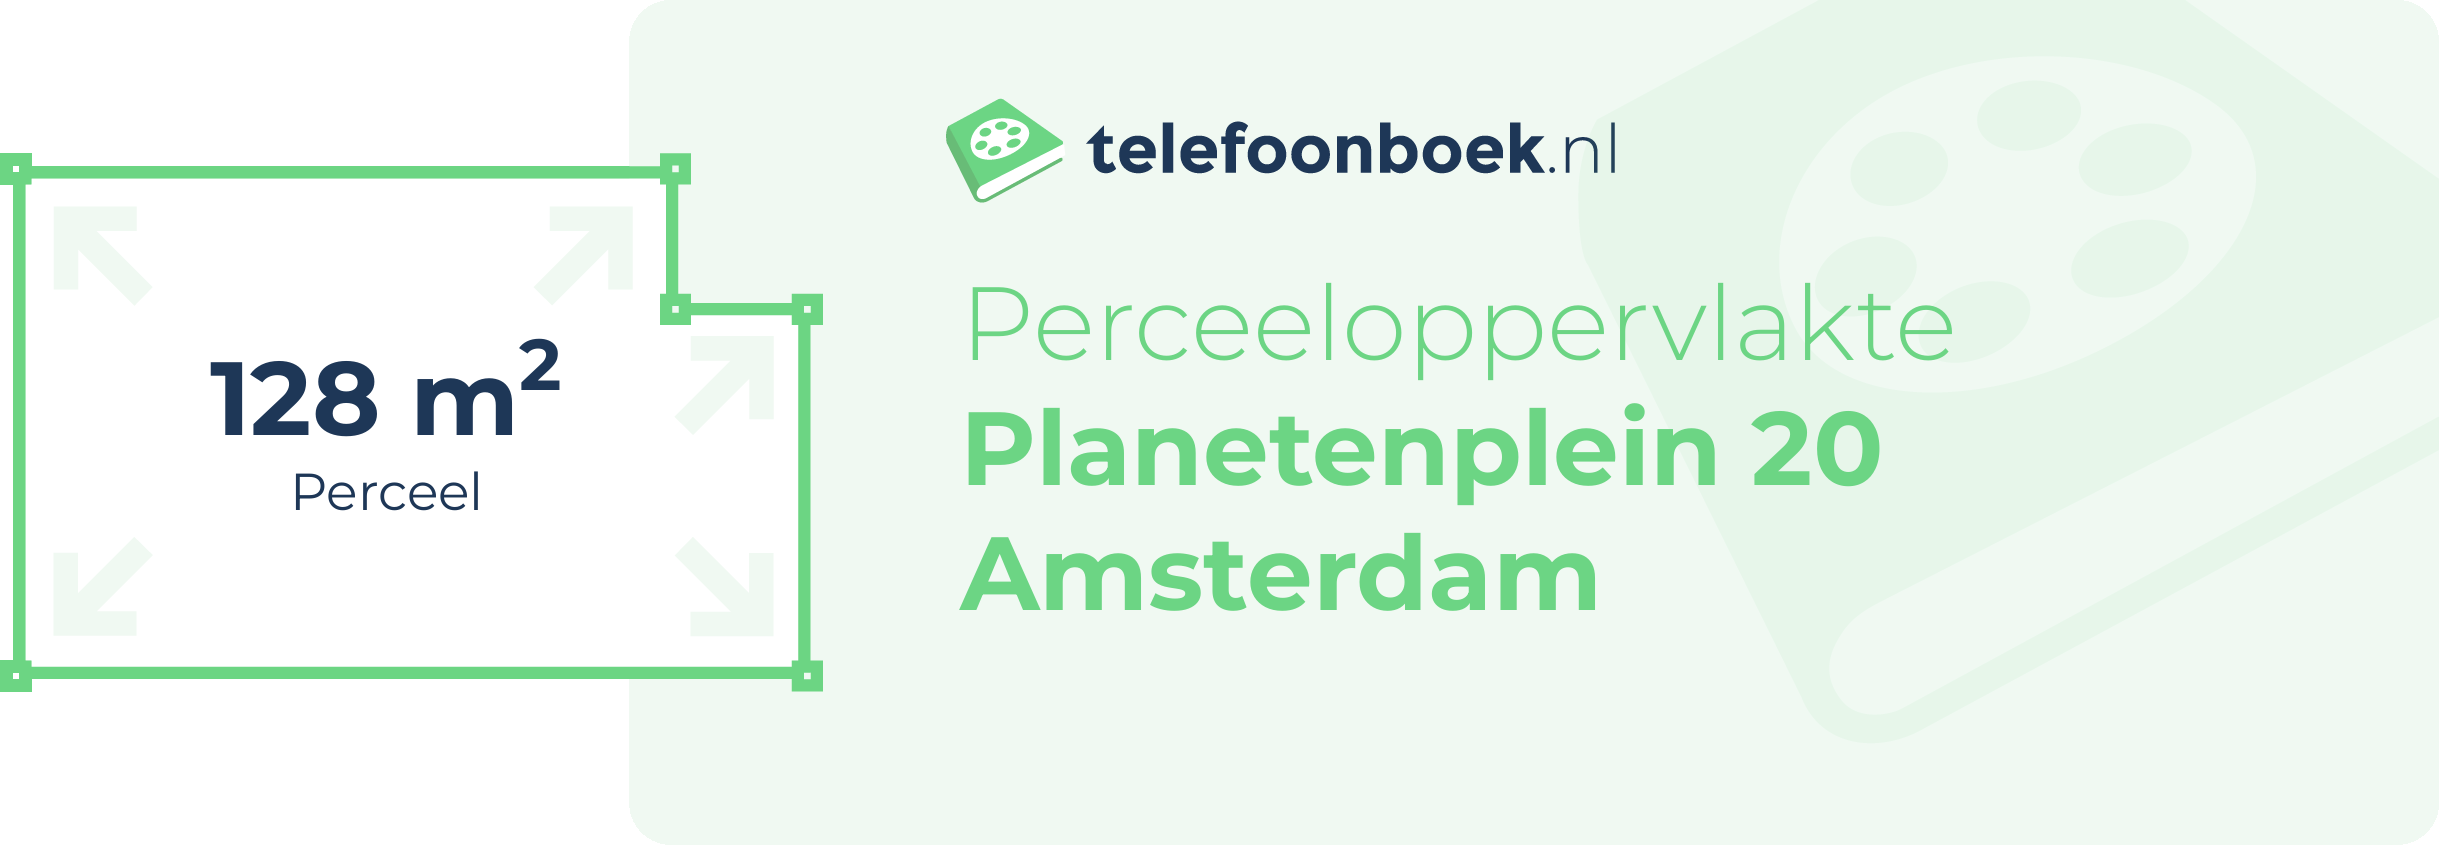 Perceeloppervlakte Planetenplein 20 Amsterdam